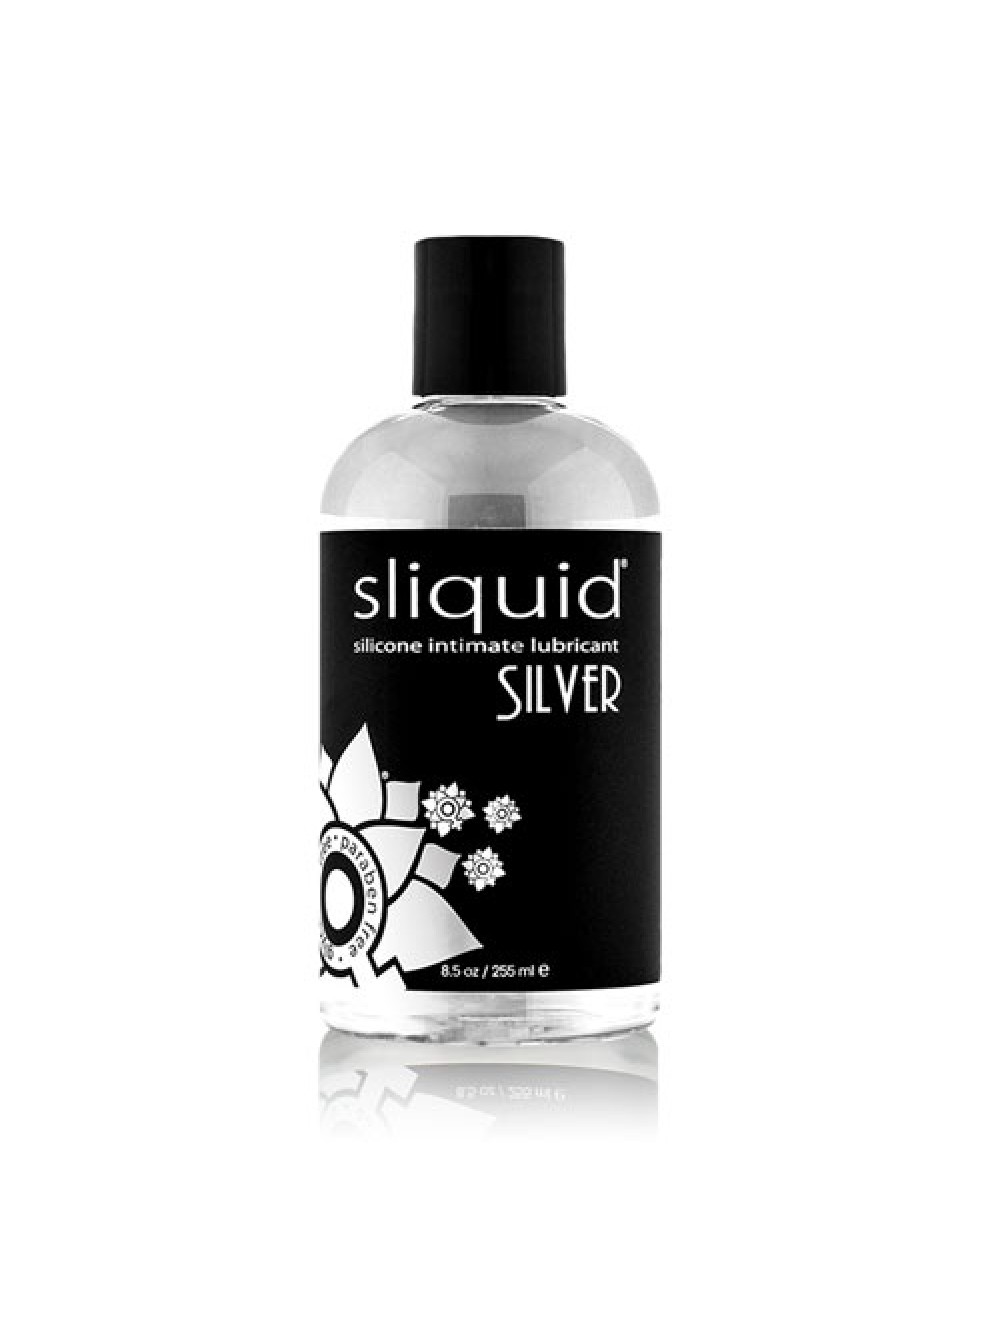 Sliquid Silicone Silver Vegan Friendly Lube 255ml 894147000128